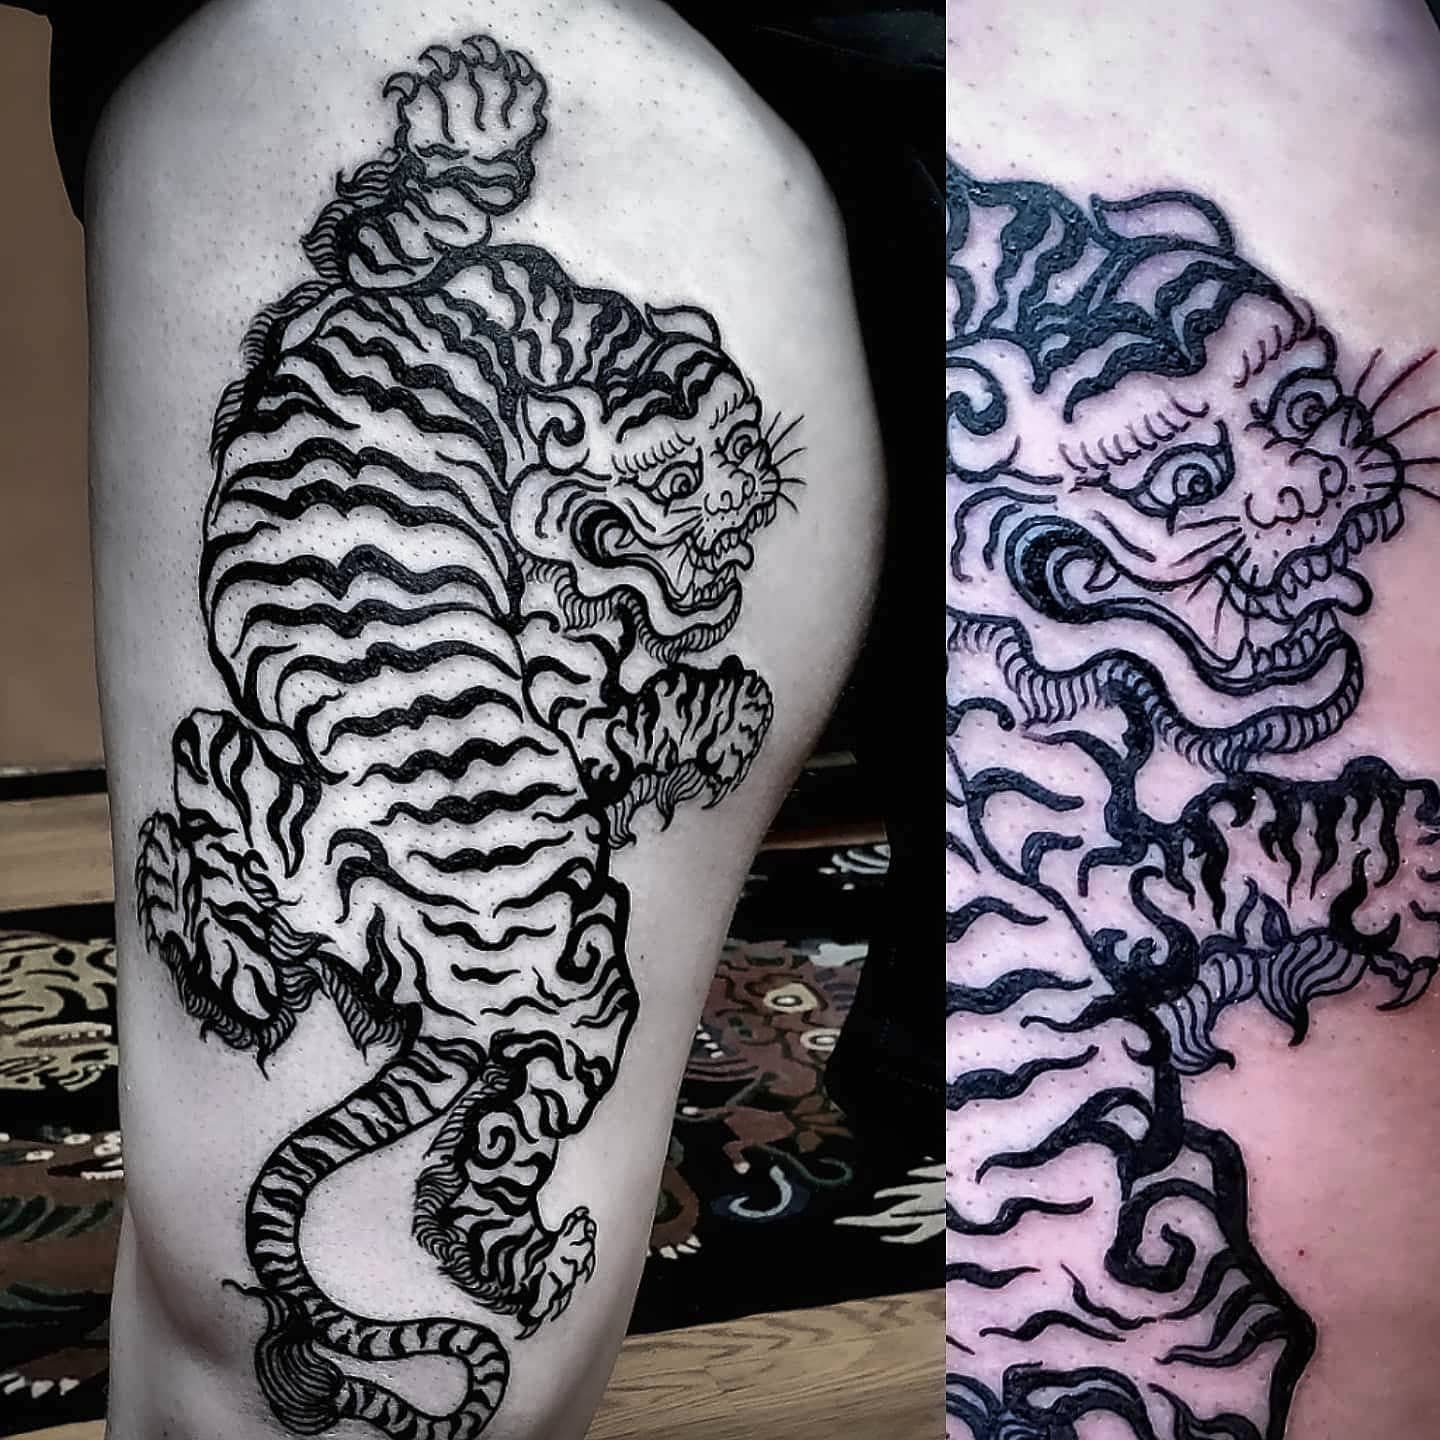 Tatuaje tradicional de muslo de tigre para hombres.